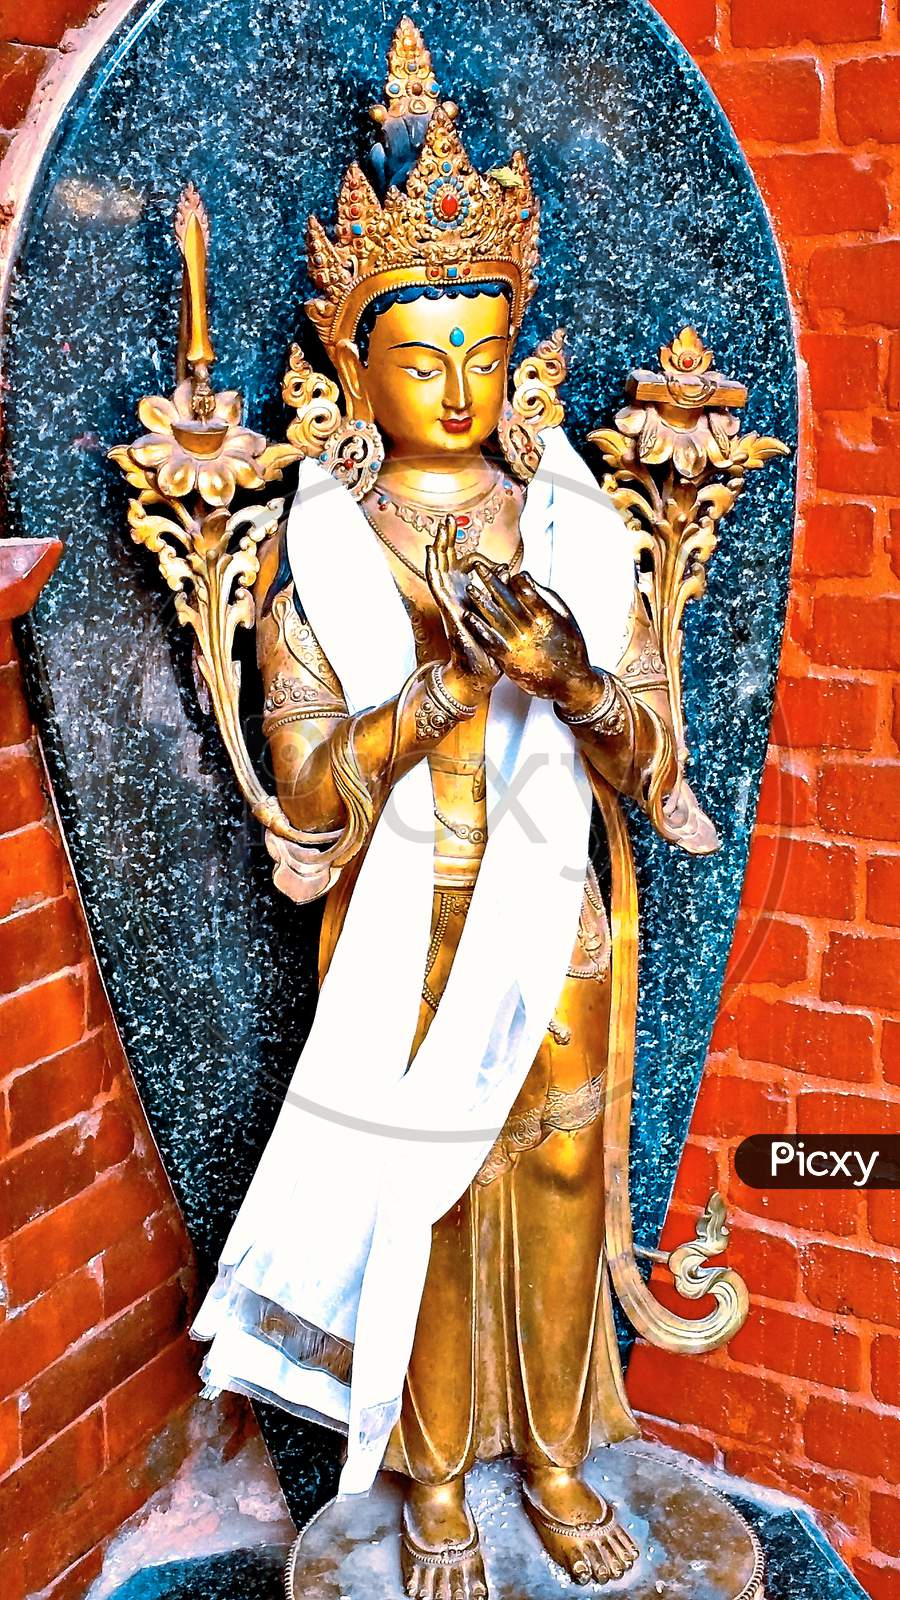 A statue of Dipankara Buddha in Lalitpur,Nepal.